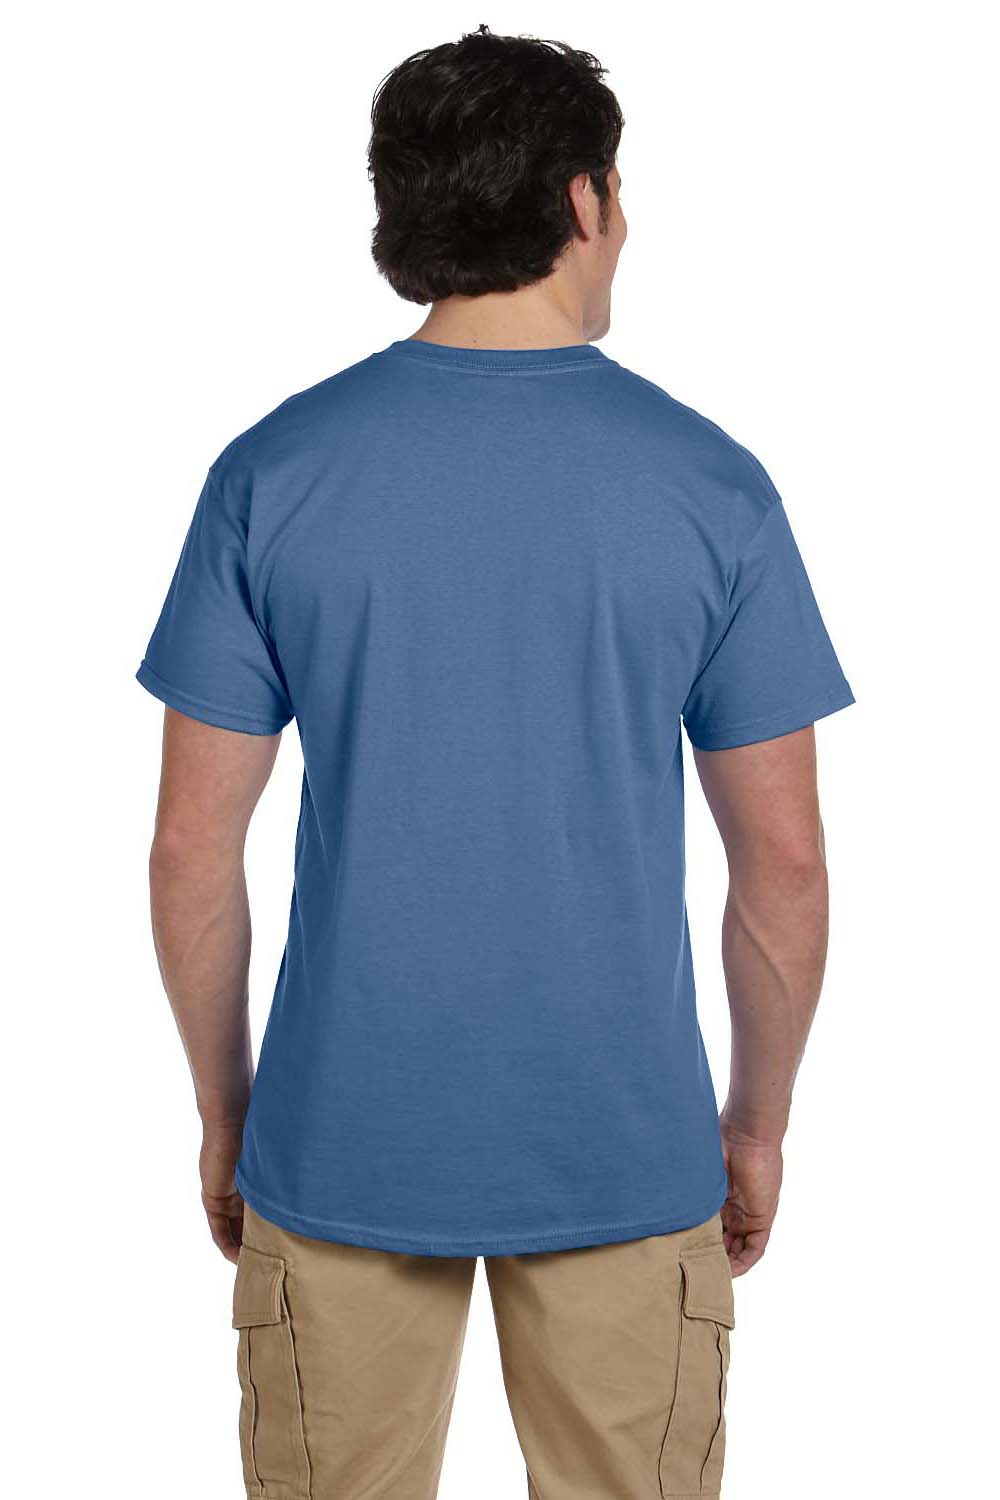 Hanes 5170 Mens EcoSmart Short Sleeve Crewneck T-Shirt Heather Blue Back